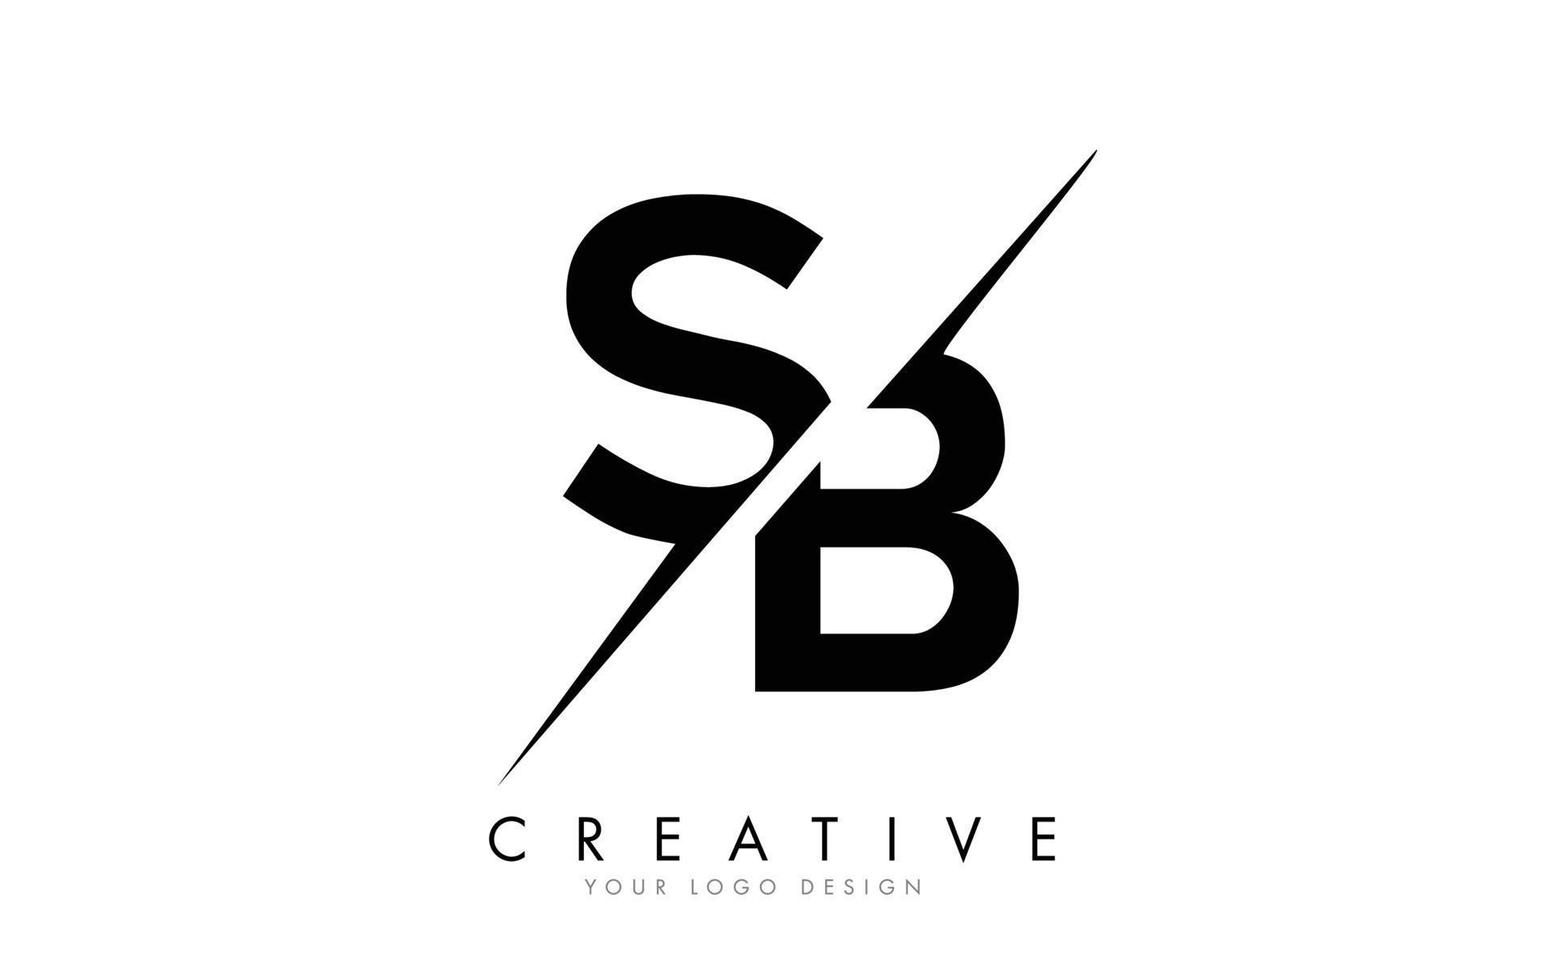 SB S B Letter Logo Design with a Creative Cut. vector